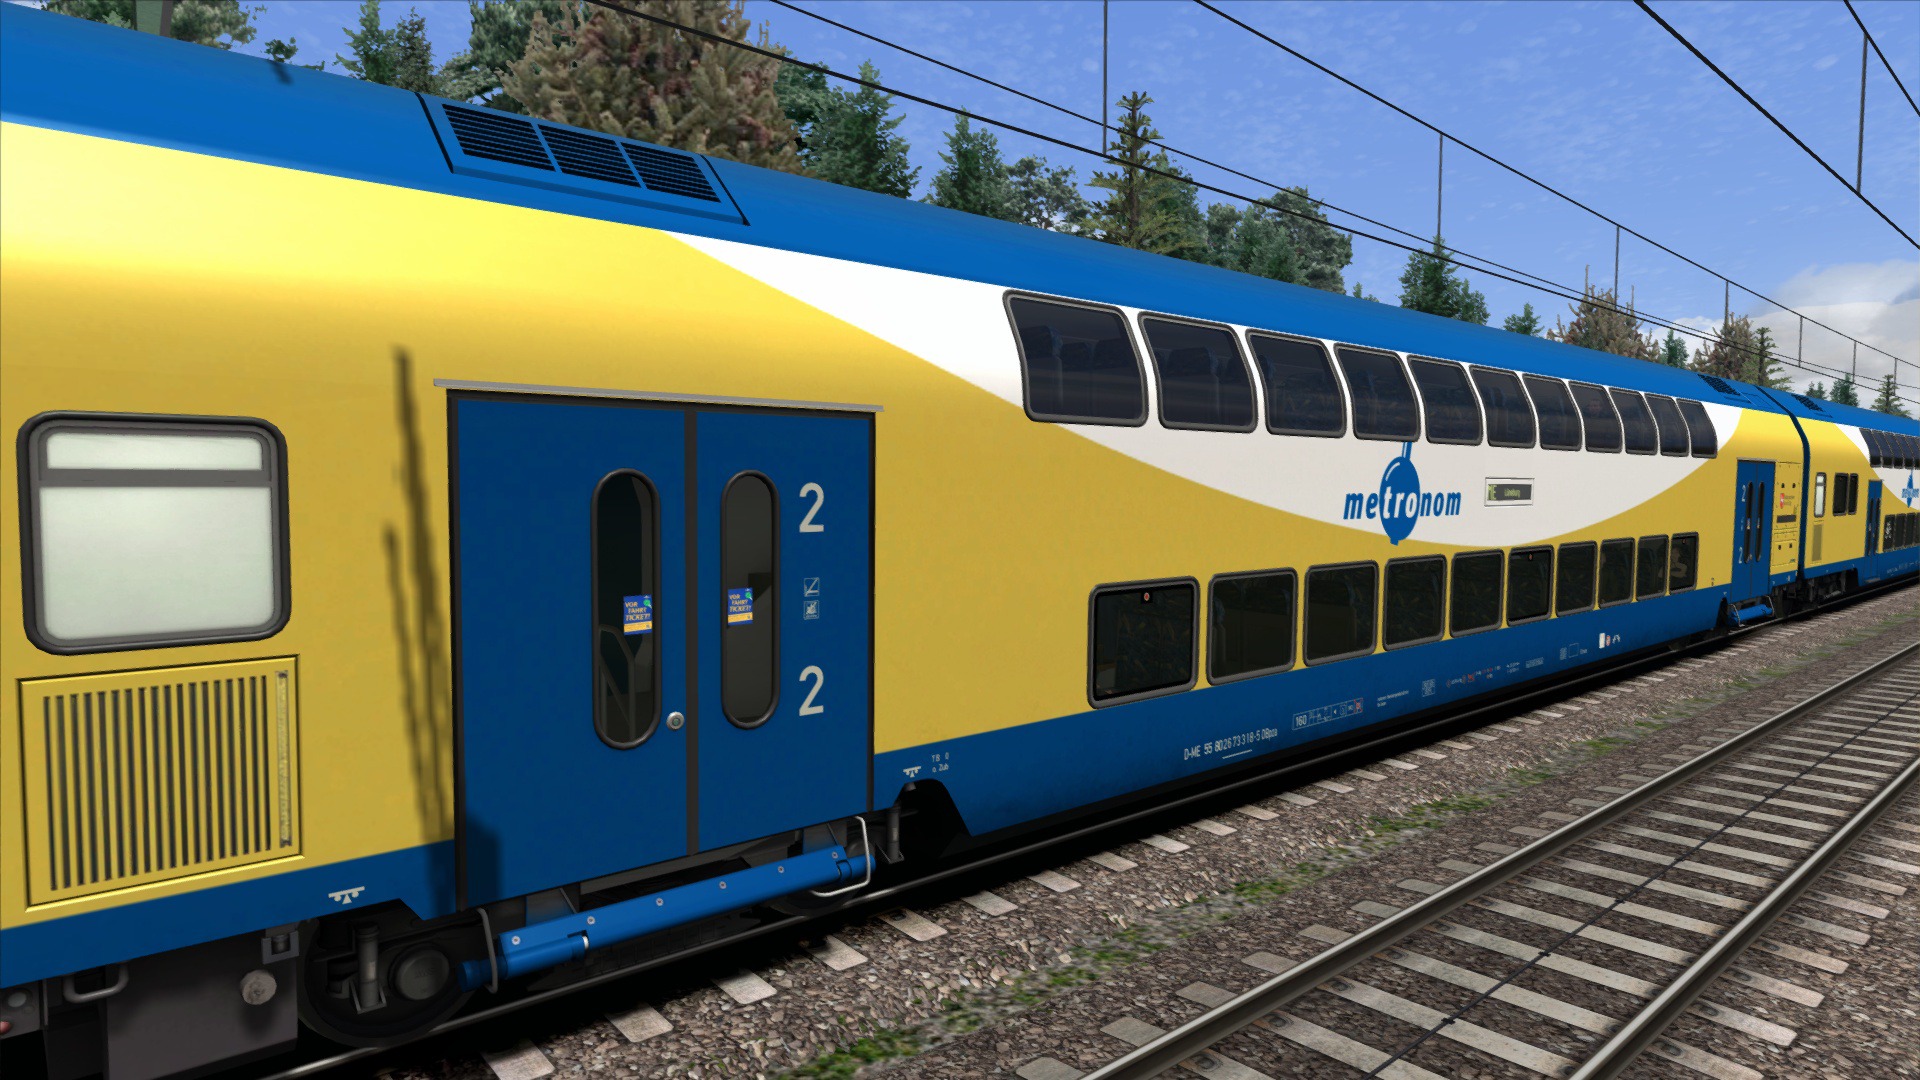 Train Simulator: Metronom ME 146 Loco Add-On screenshot